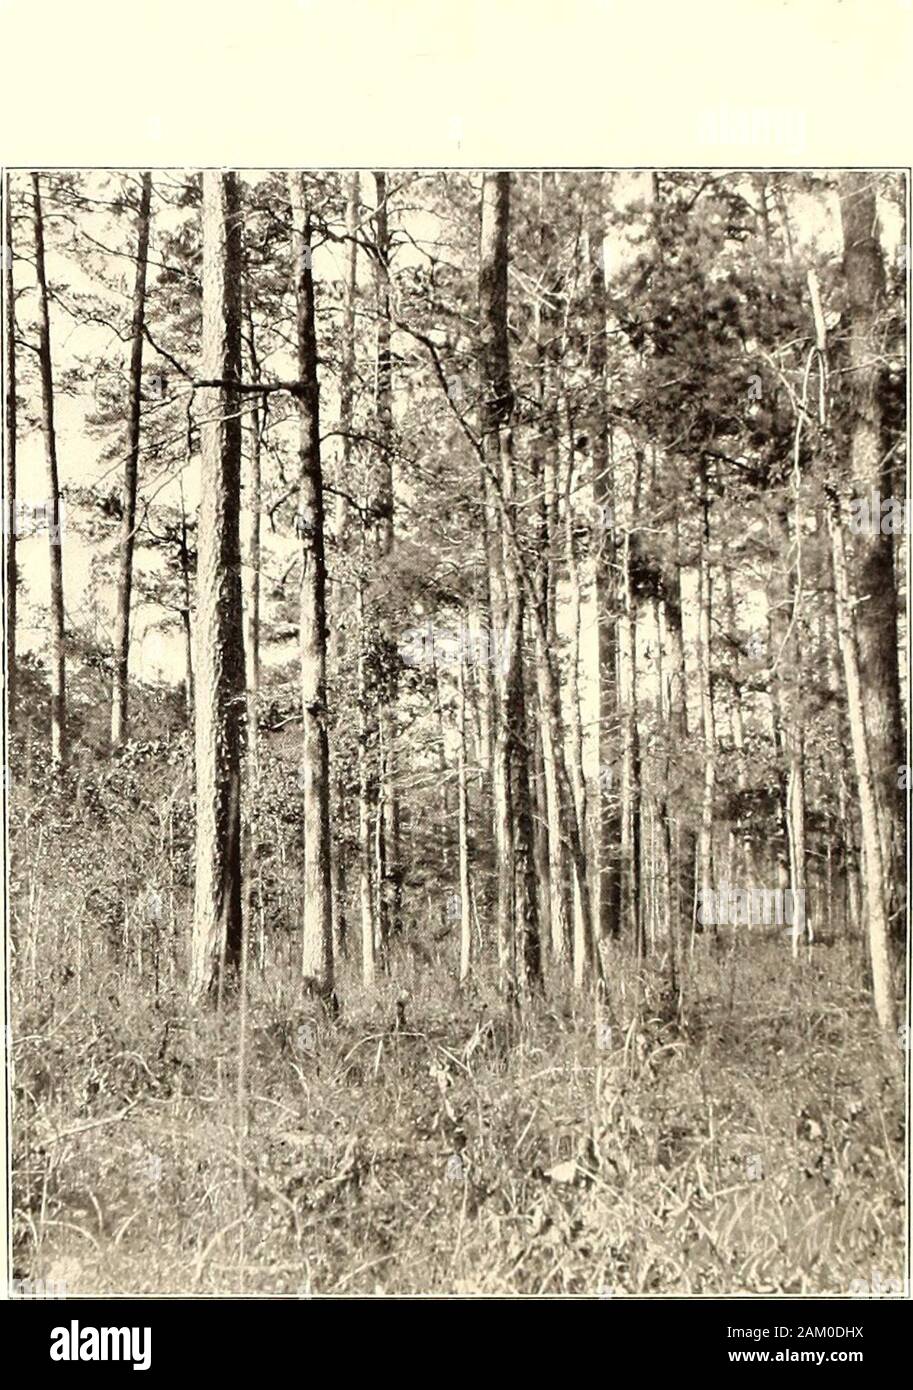 A working plan for forest lands near Pine Bluff, Arkansas . decidua Walt. Silver Maple Acer saccharinum Linn. Red Maple leer rubrum Linn. Boxelder Acer negundo Linn. Basswood ( Linn.) Ti/ia americana Linn. Dogwood Cornusflorida Linn. Black Gum Nyssa sylvatica Marsh. n bite Ash Fraxinus americana Linn. o. Loblolly Pine and Hardwoods in Mixture on a Pine Flat. U. S. DEPARTMENT OF AGRICULTURE.BUREAU OF FORESTRY- BULLETIN No. 32. GIFFORD PINCHOT, Forester. A WORKING PLAN FOB FOREST LANDS NEARPINE BLUFF. ARKANSAS. BY FREDERICK E. OLMSTED. FIELD ASSISTANT. BUREAU OF FORESTRY. Stock Photo